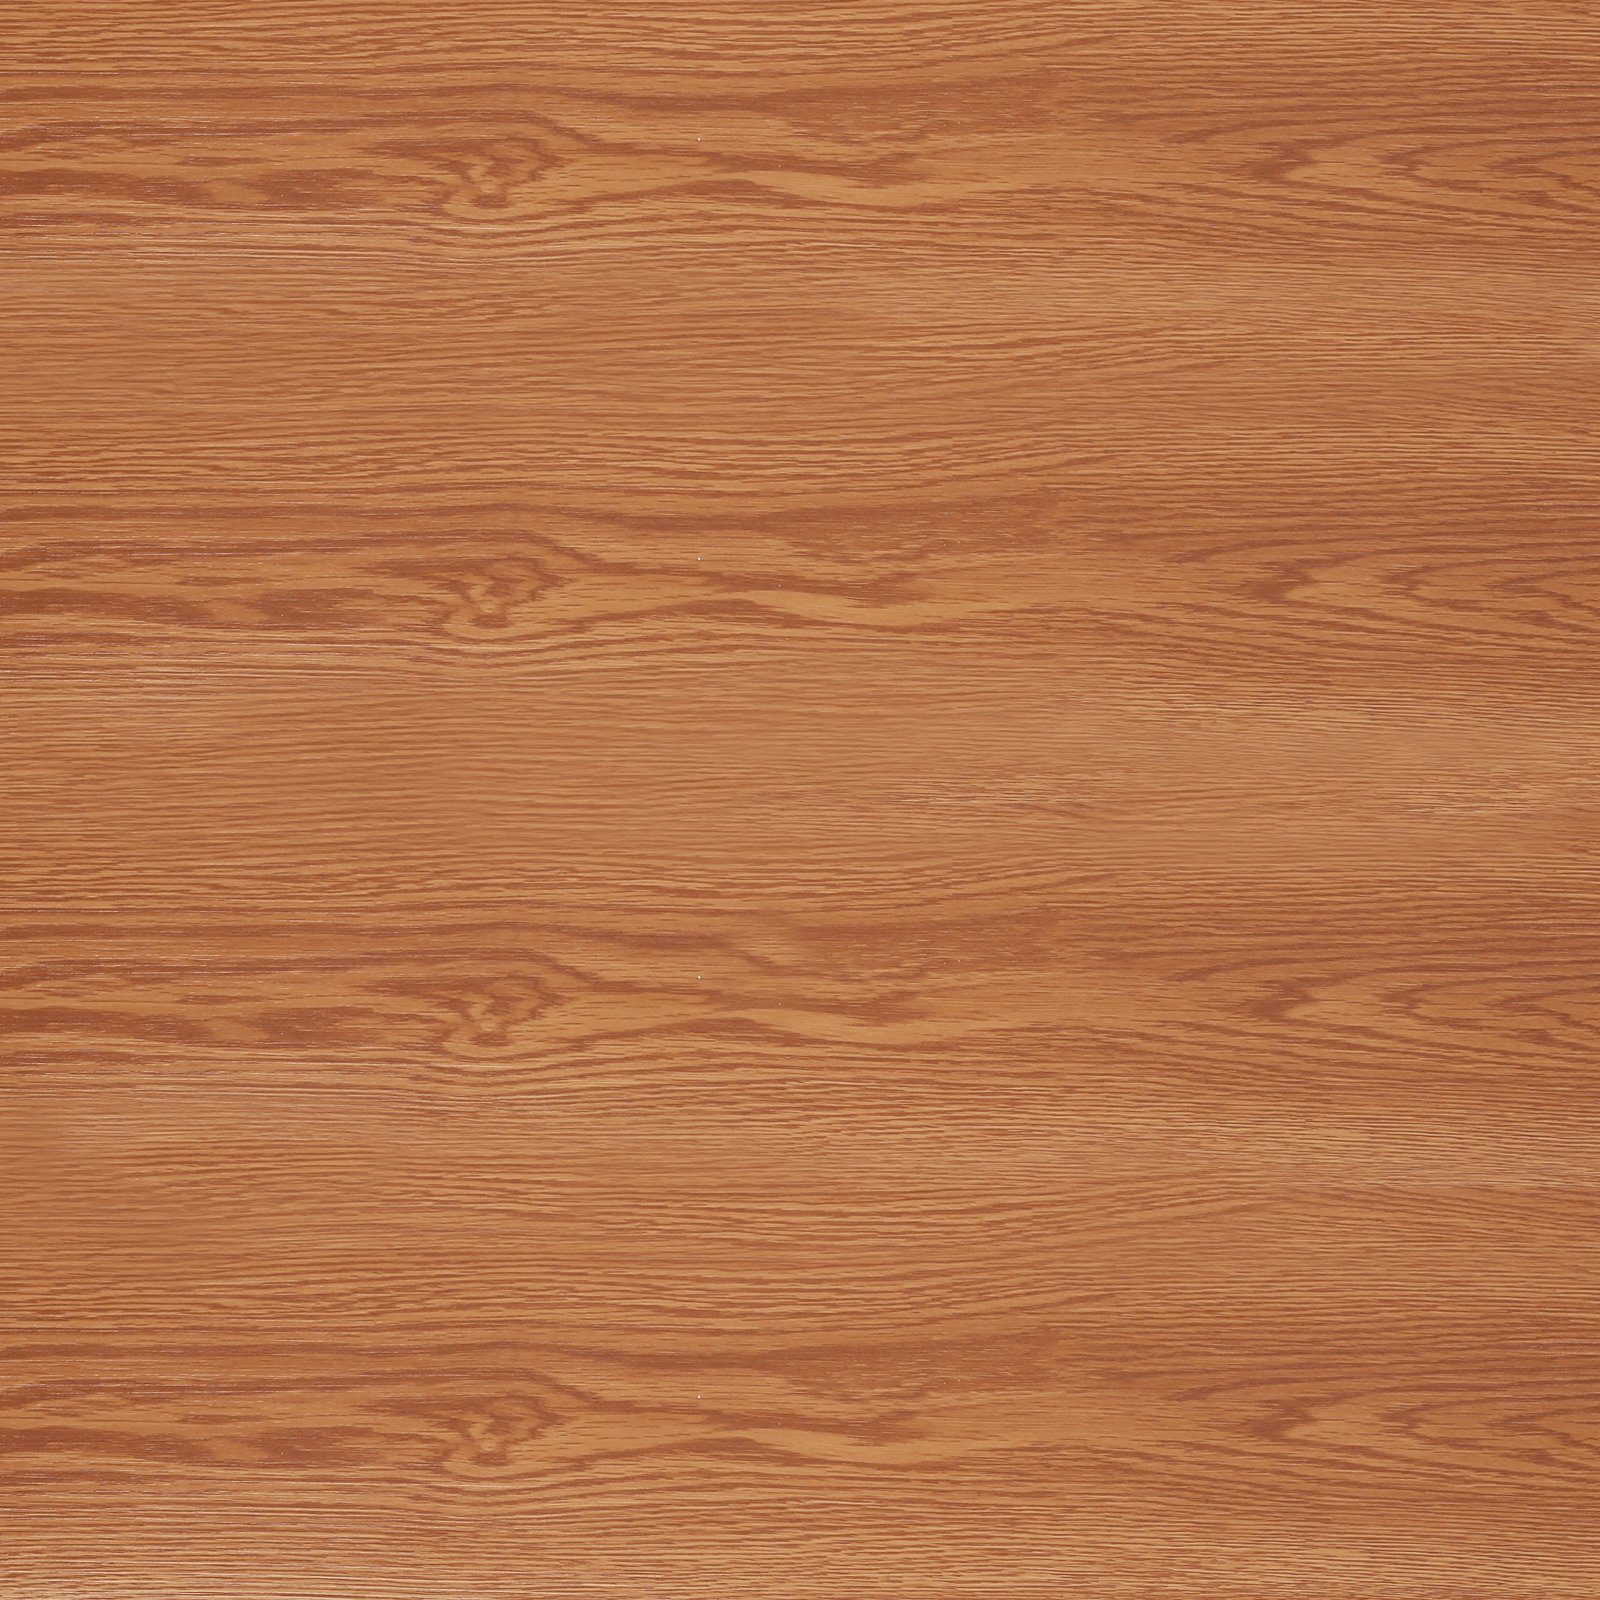 Clanmacy Vinylboden PVC Classic selbstklebend Planke, Warm Oak,selbstklebend, Vinylboden